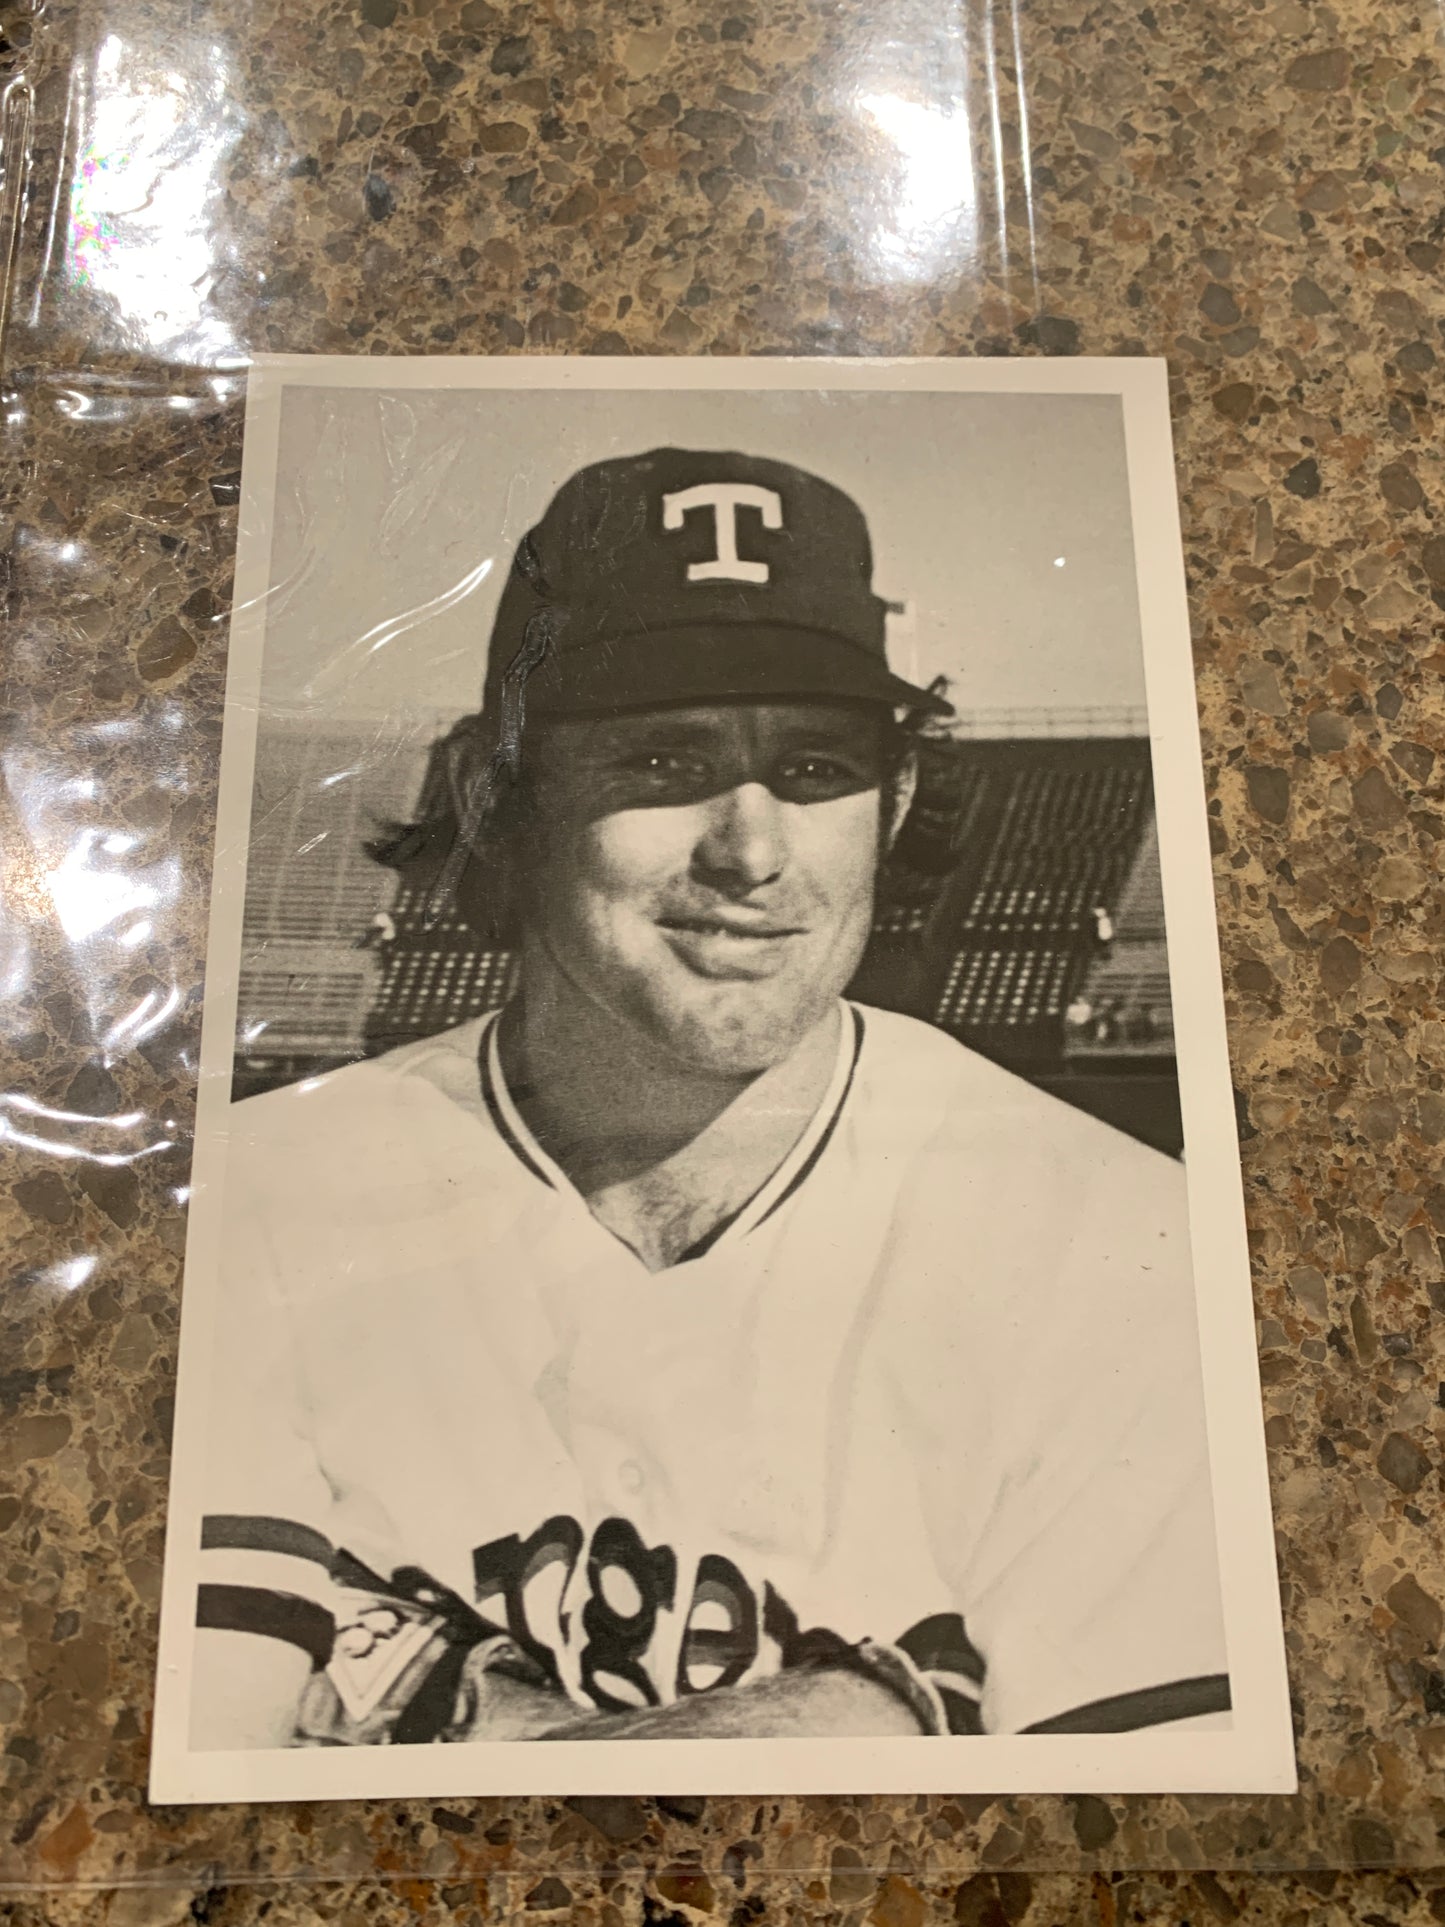 1975 Toby Harrah 3rd Baseman of the Rangers rare black and white 5x7 photo